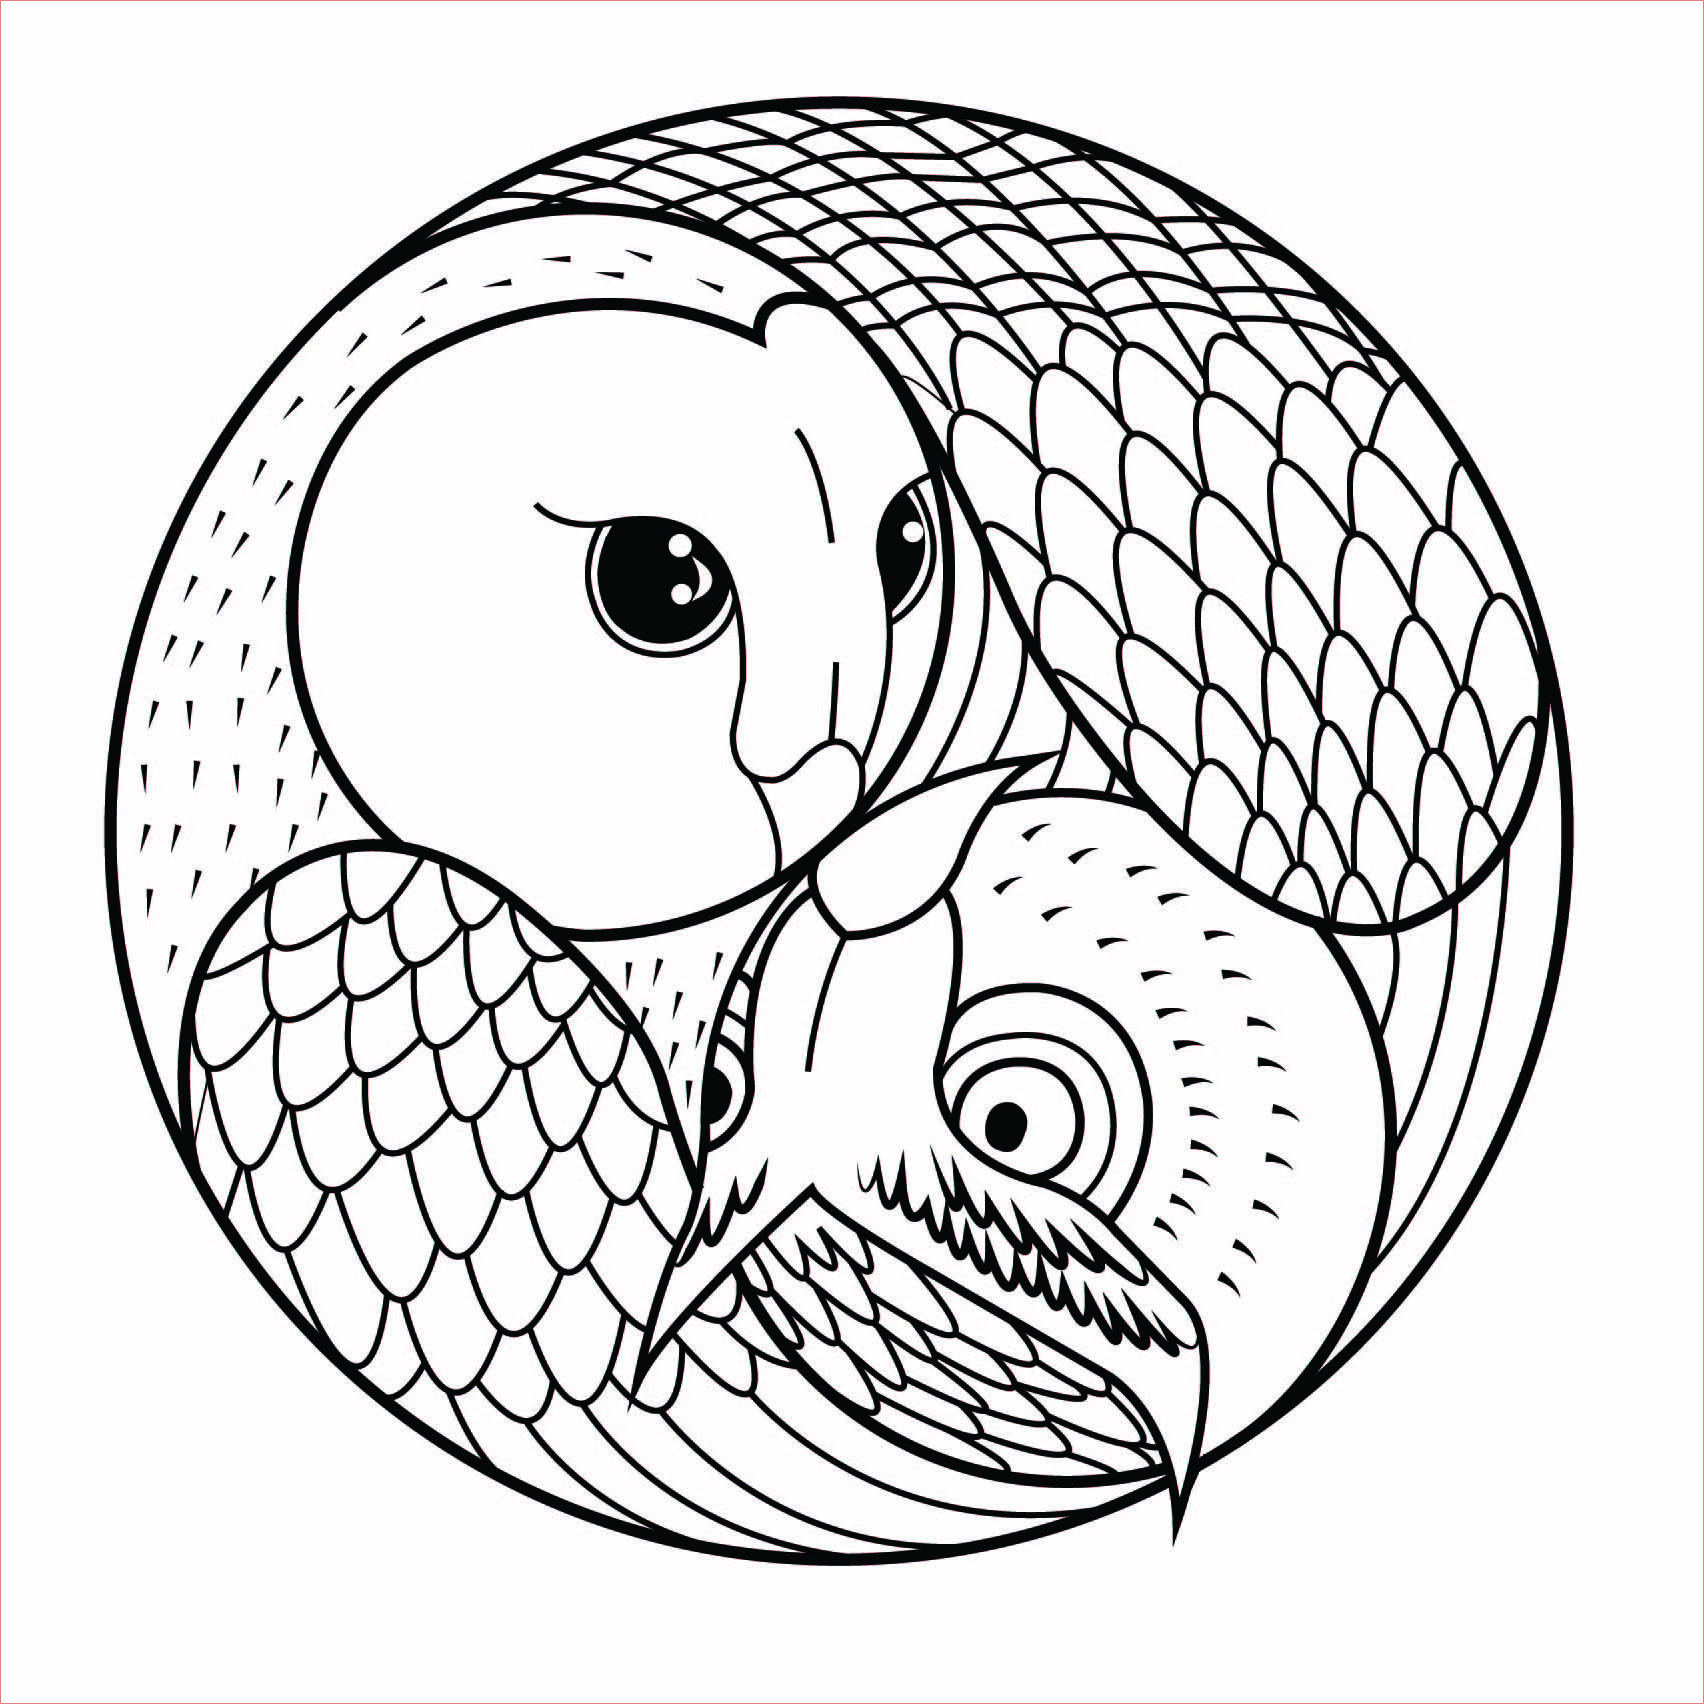 image=mandalas coloring mandala with 2 owls 1